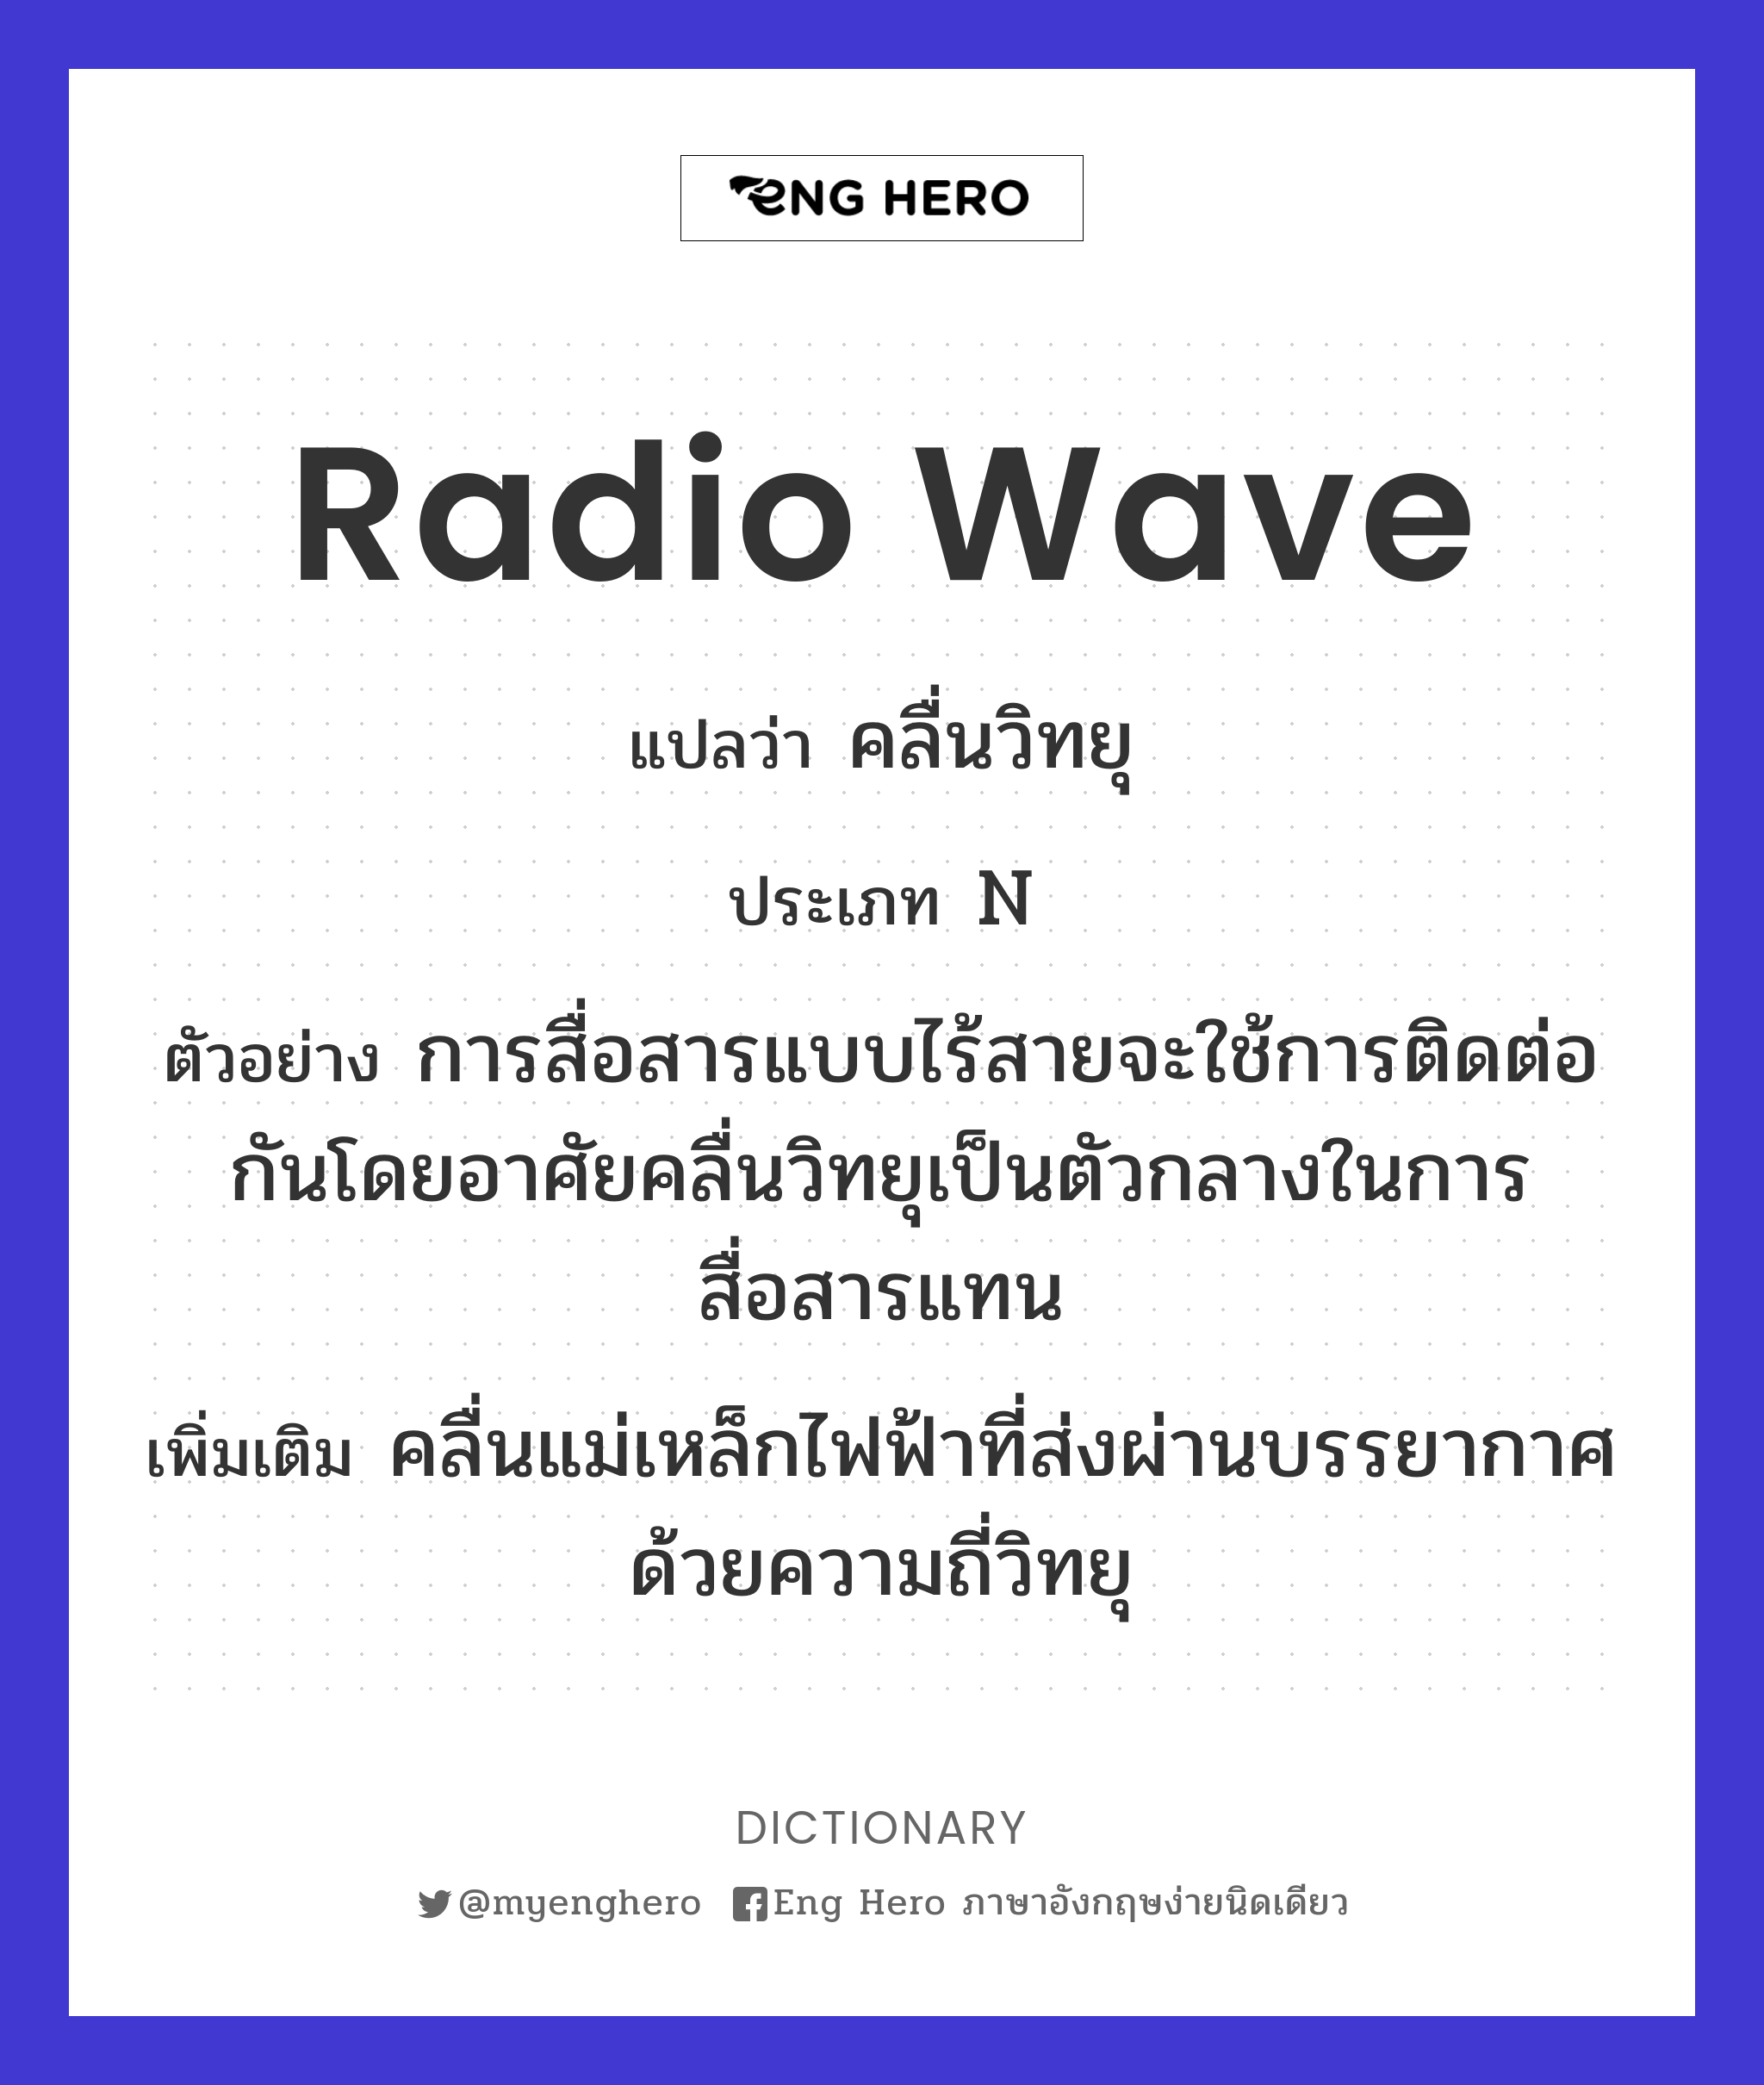 radio wave